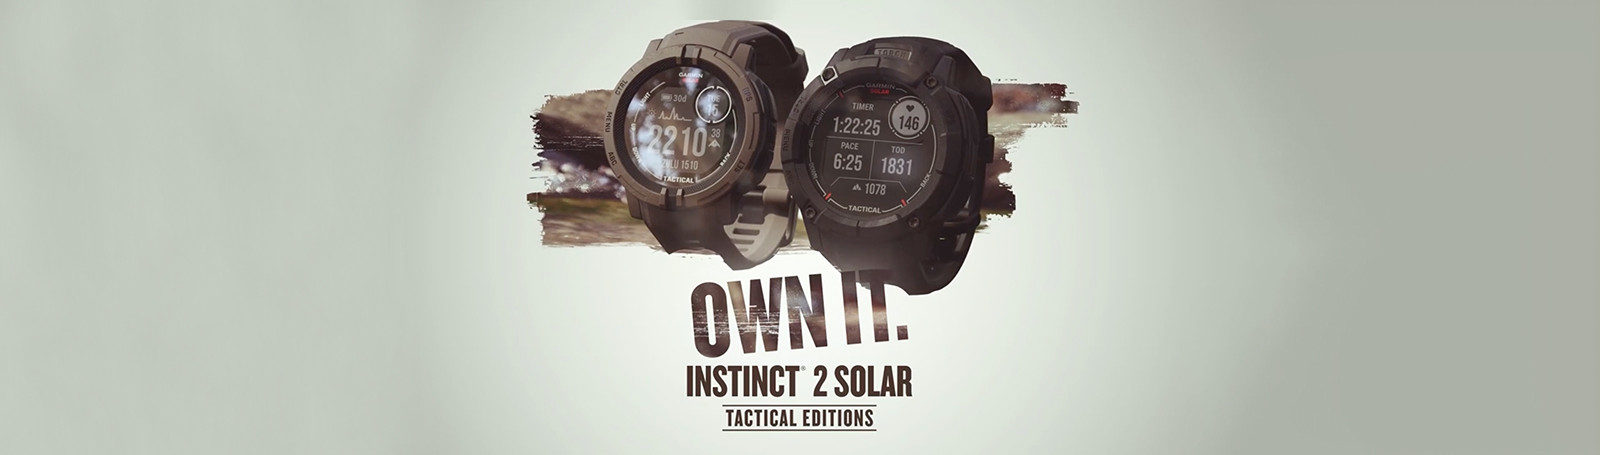 Garmin Instinct® 2X Solar - Tactical Edition